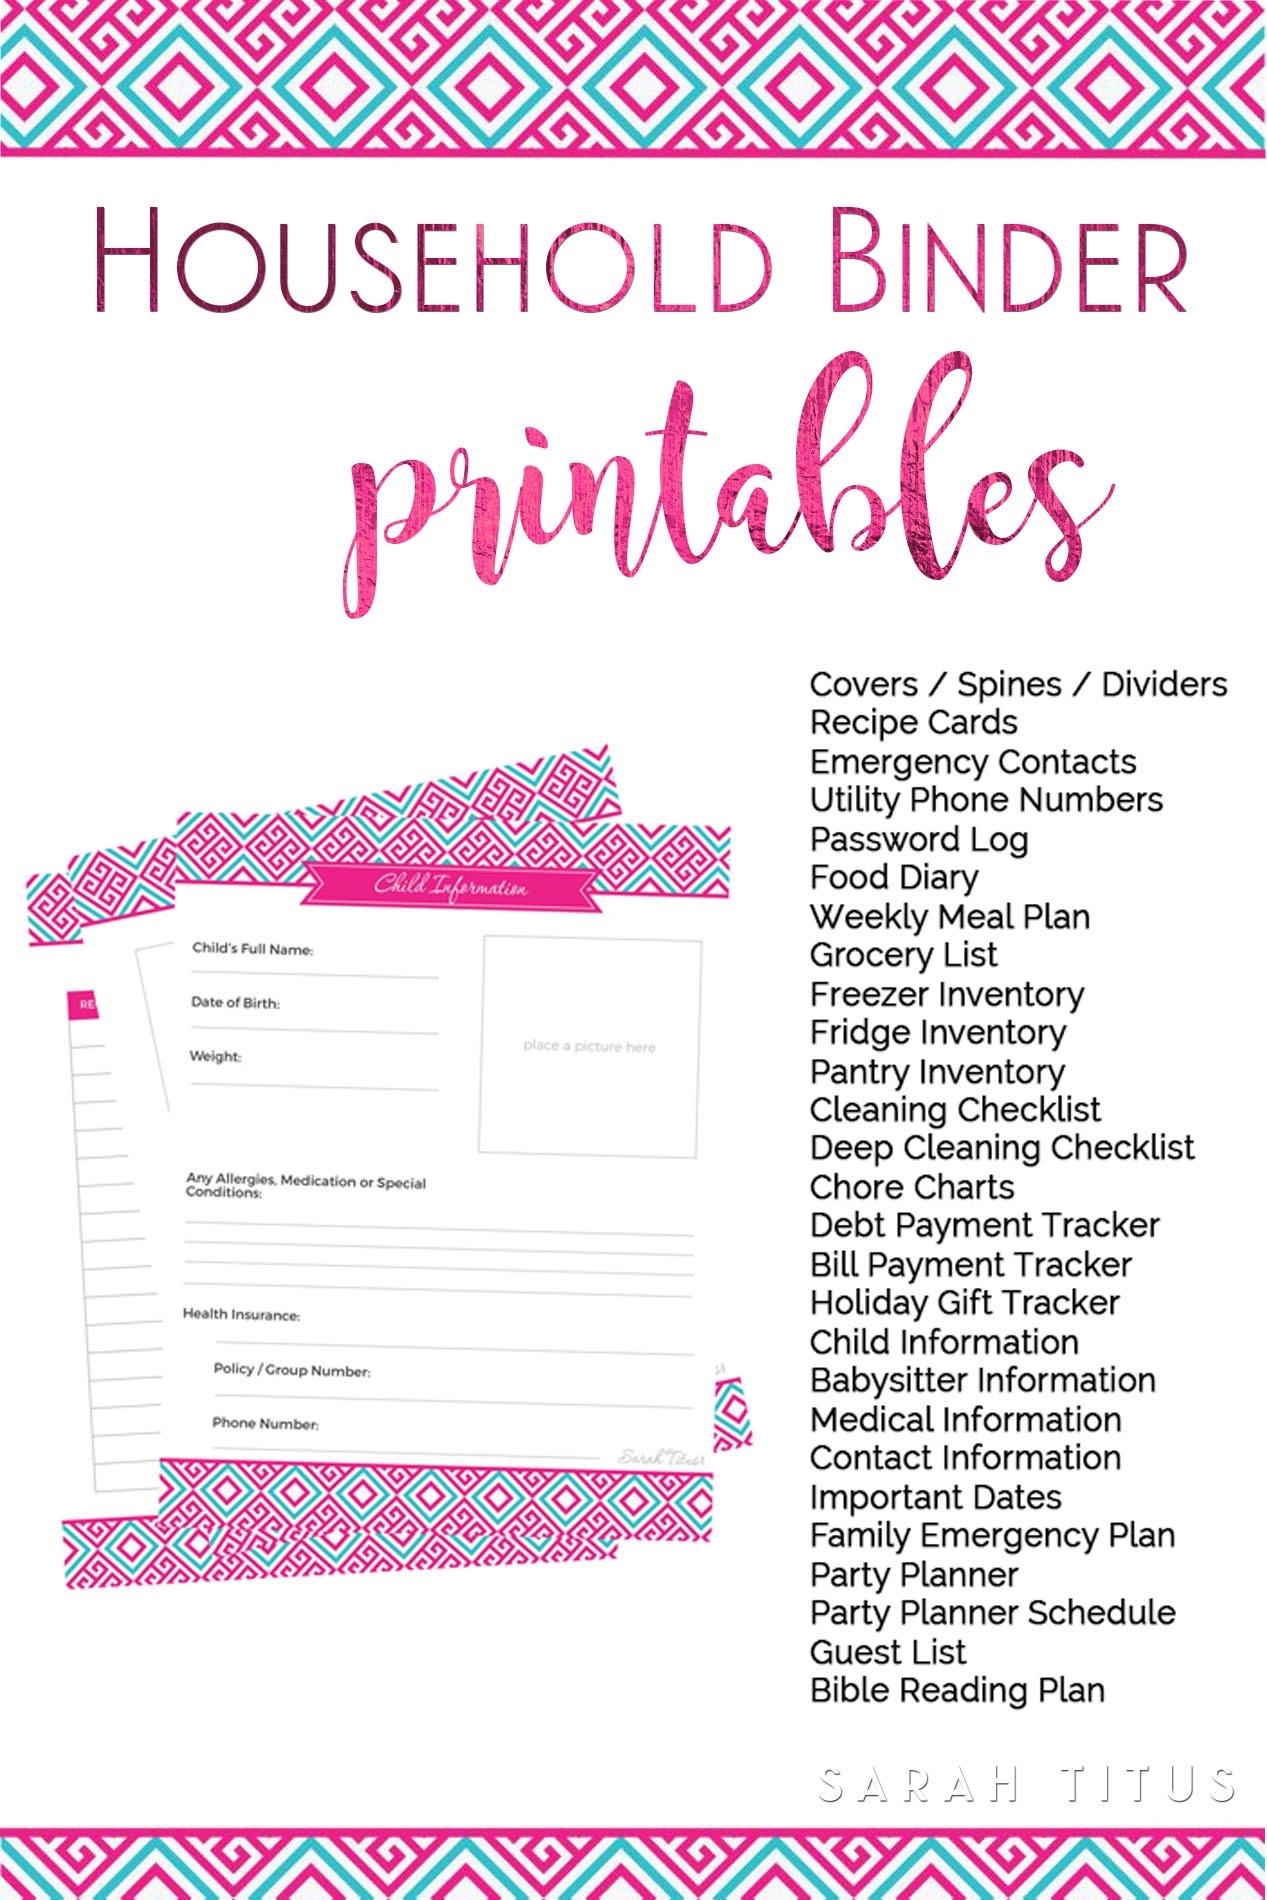 Household Binder Free Printables - Sarah Titus  Utility Bills Payment Printable List